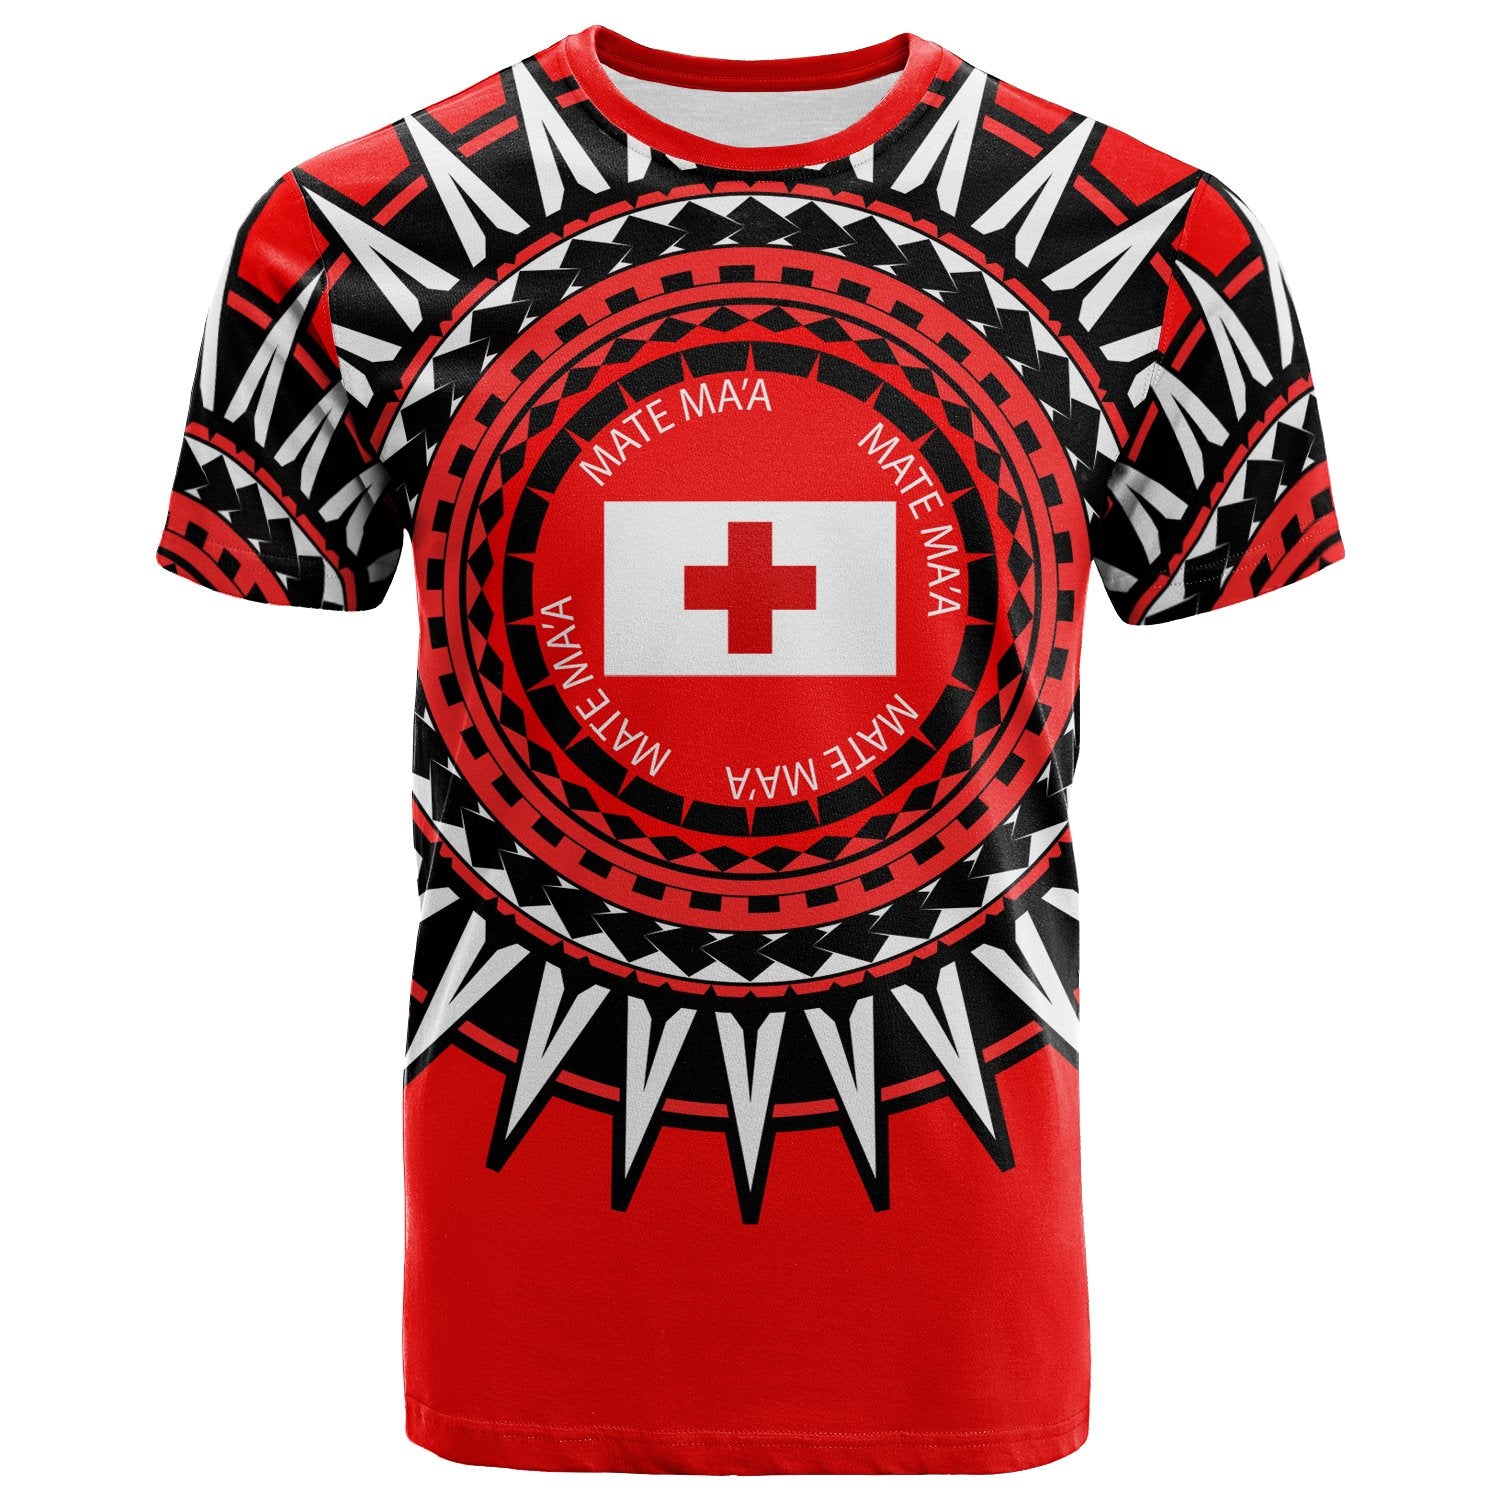 Tonga Custom T Shirt Tonga Rugby Mate Maa Sunshine Unisex Red - Polynesian Pride